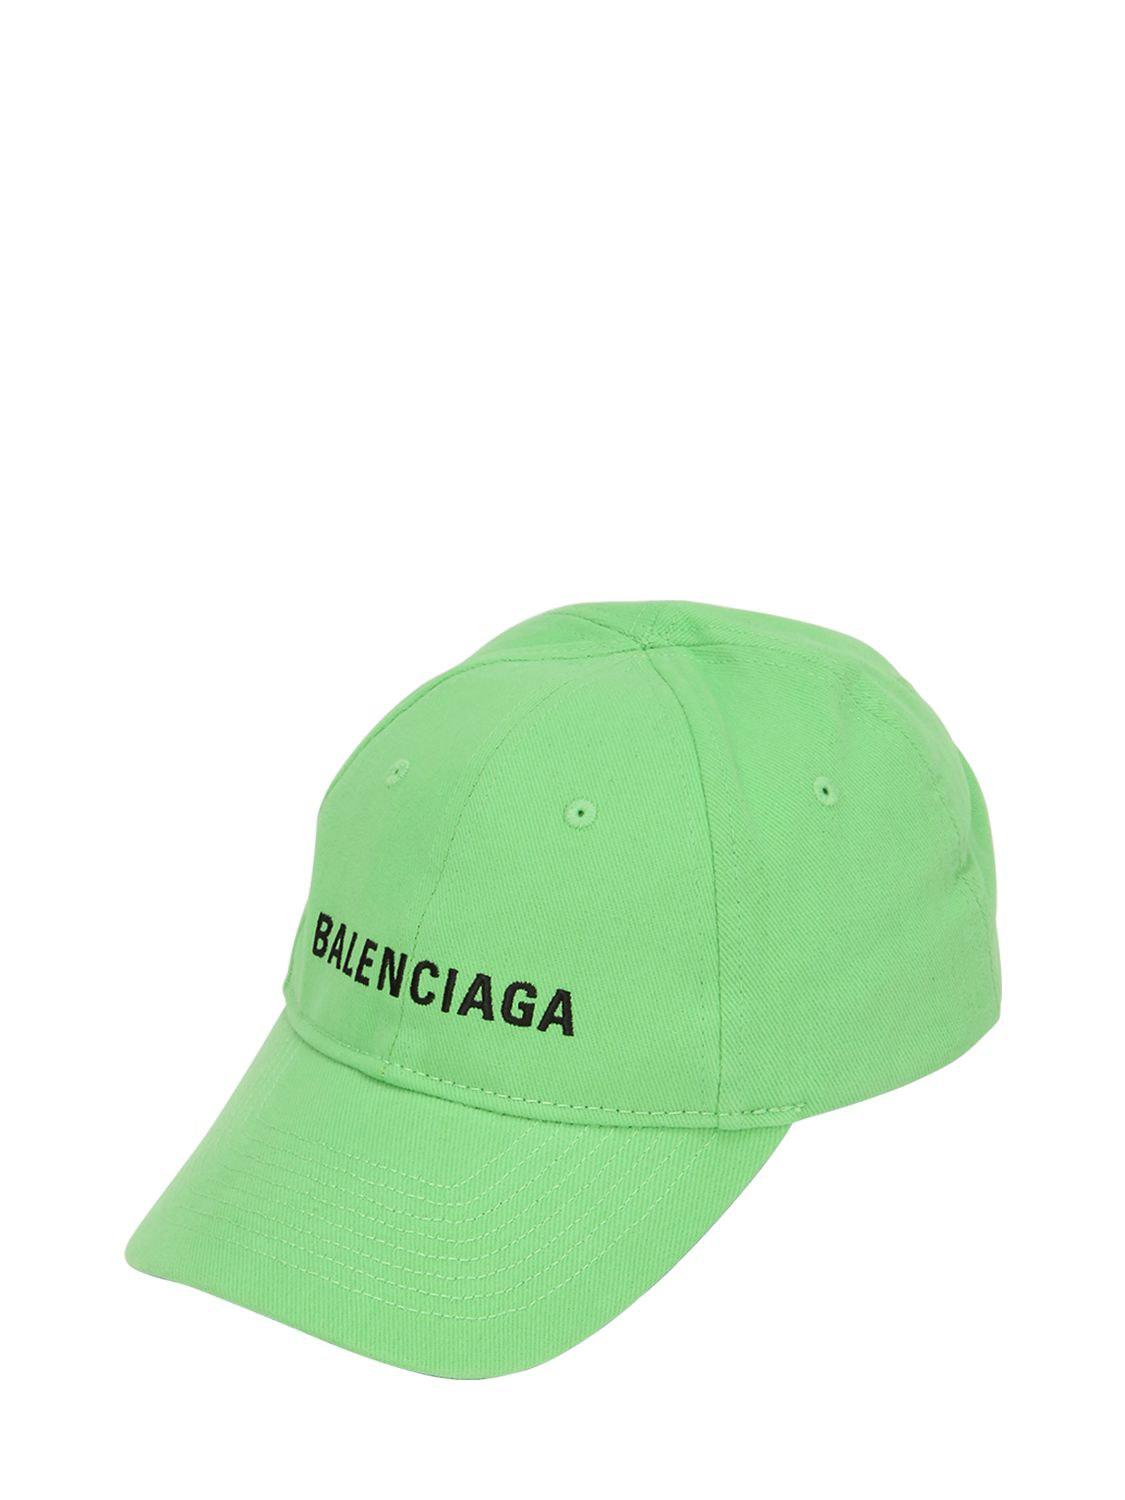 balenciaga green hat